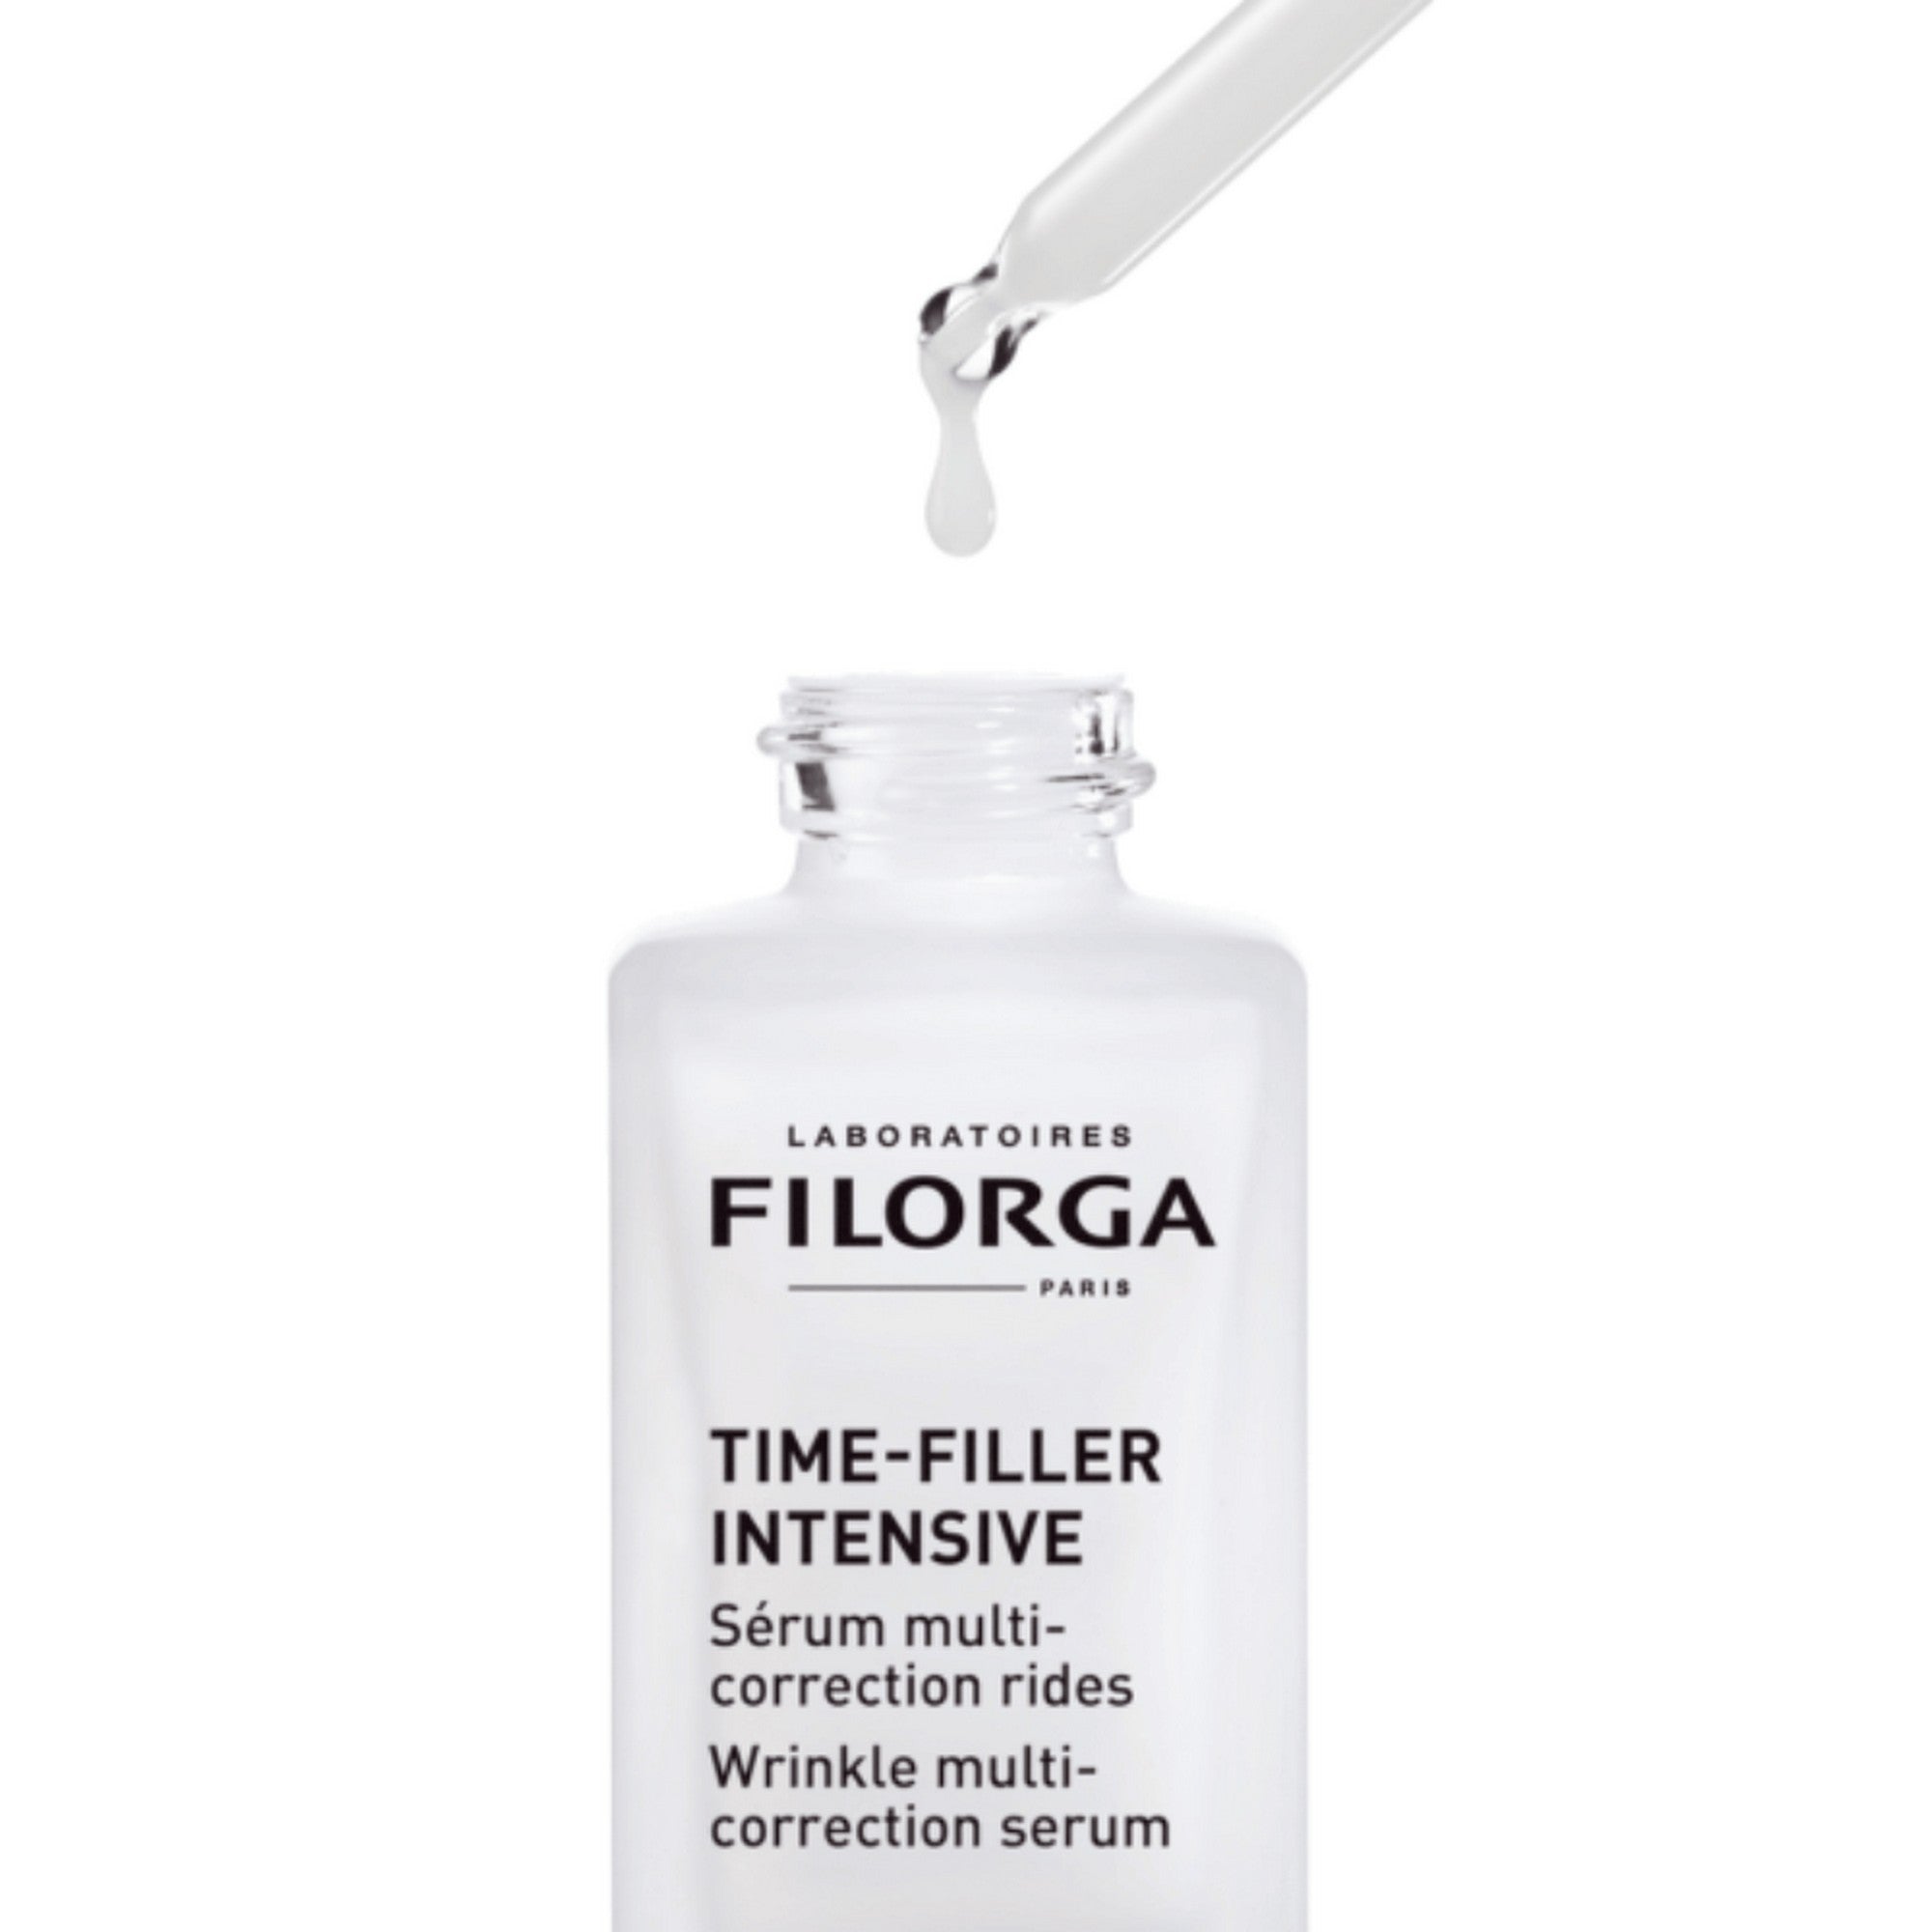 FILORGA TIME FILLER INTENSIVE SERUM with dropper outside of bottle